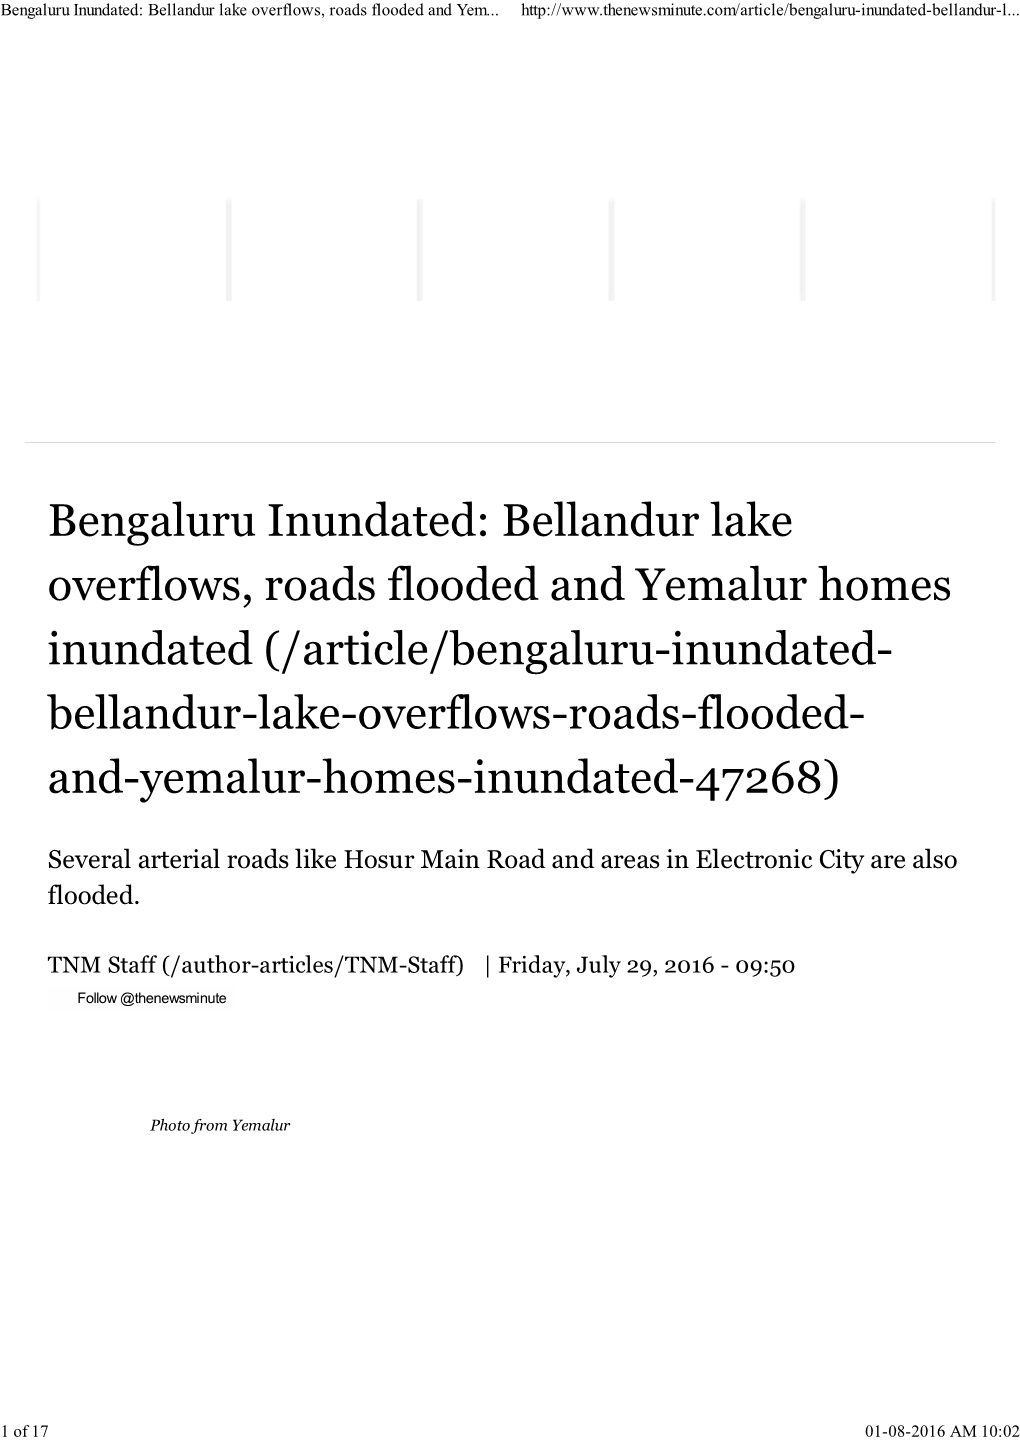 Bellandur Lake Overflows, Roads Flooded and Yemalur Homes